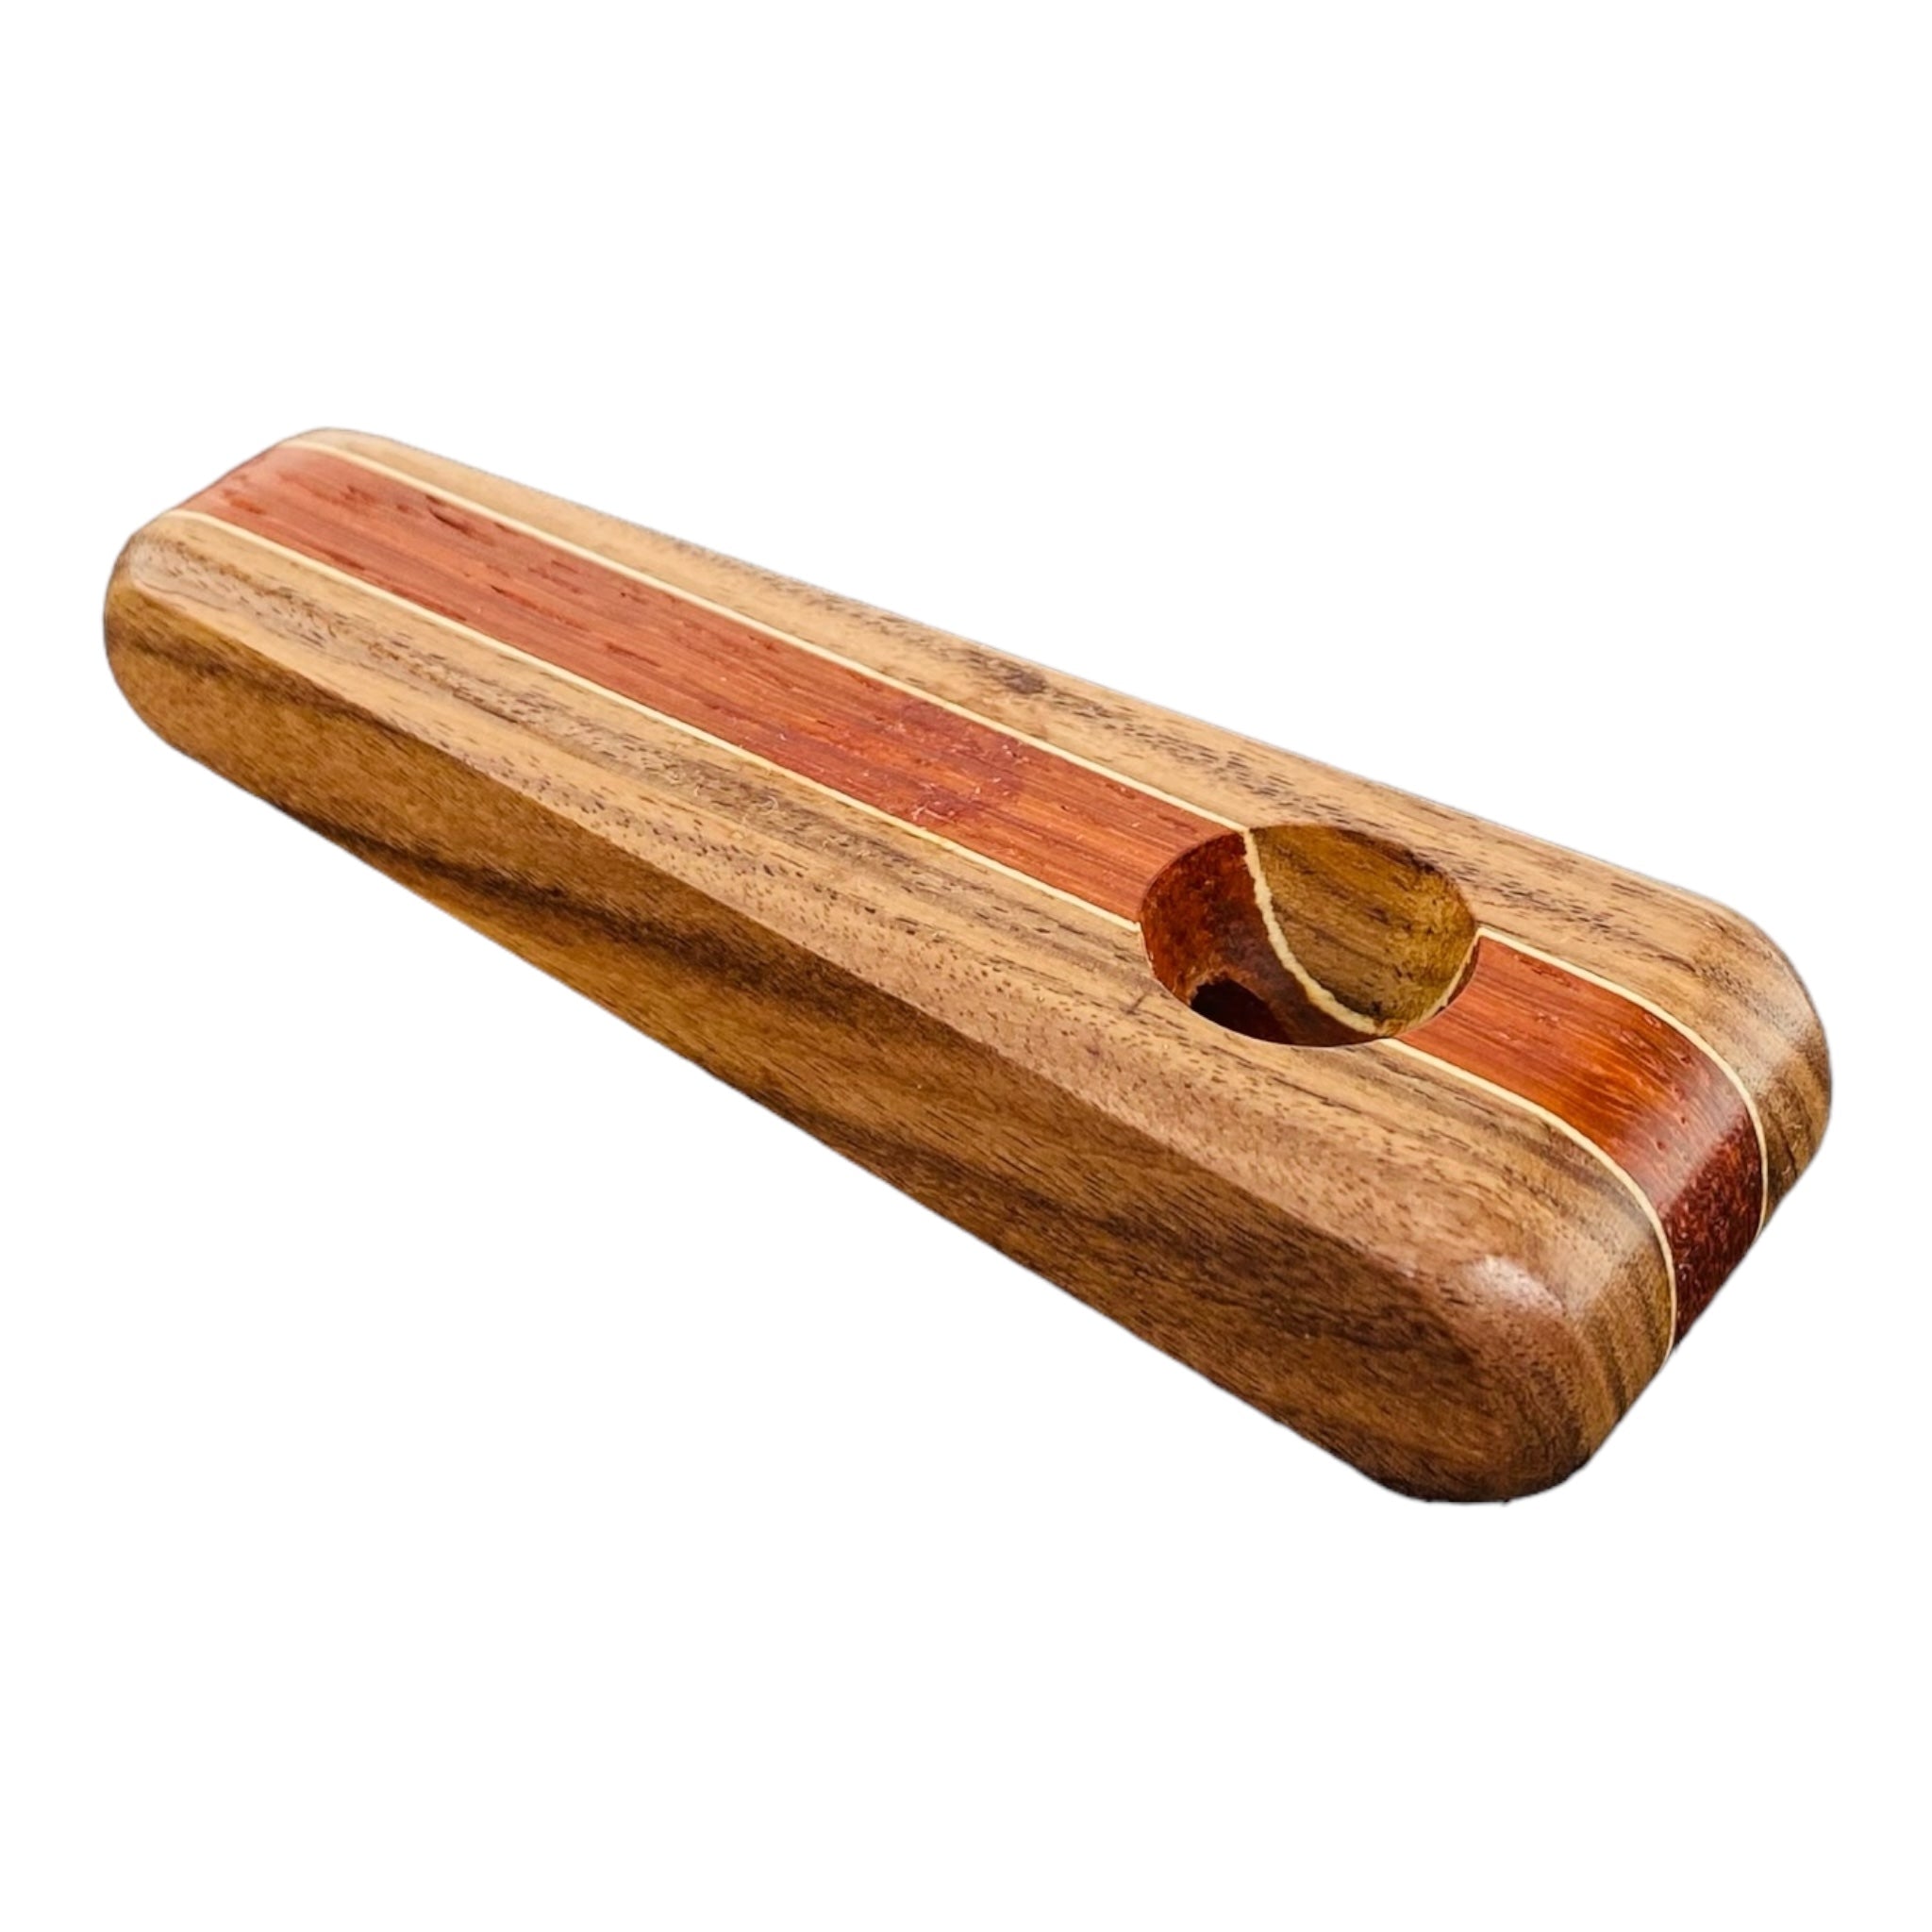 Wood Hand Pipe - Small Two Tone Hardwood Smoking Pipe